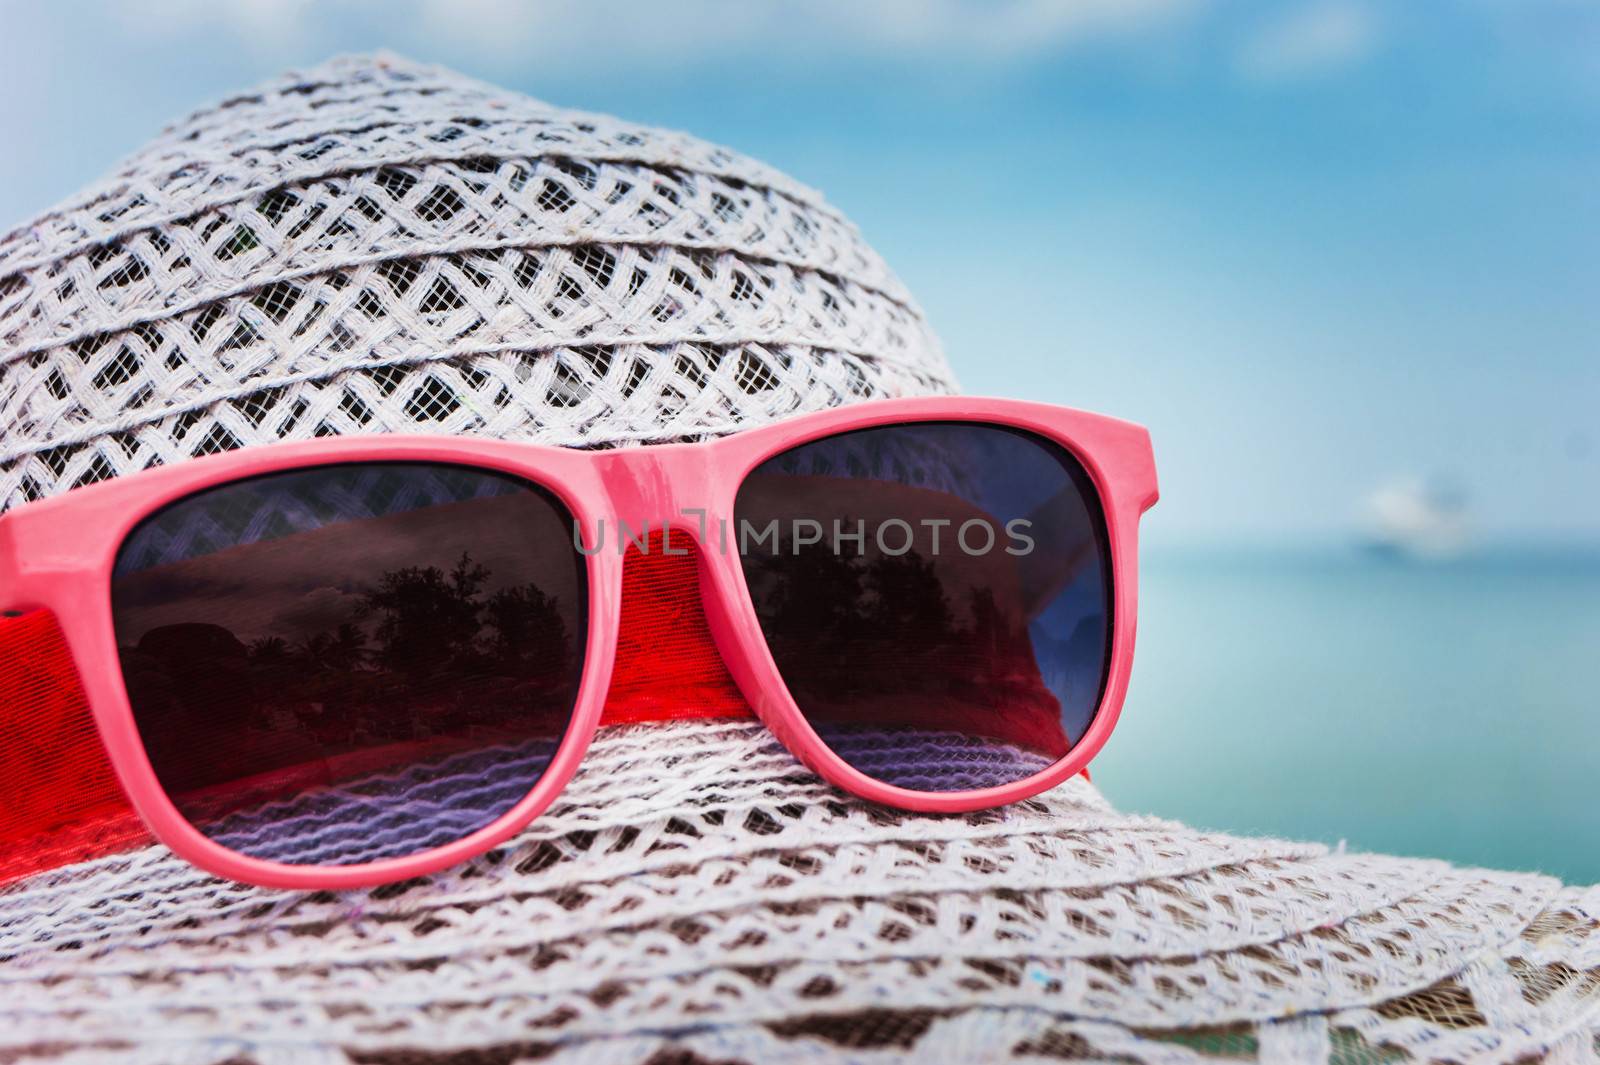  hat and sunglasses by oleg_zhukov